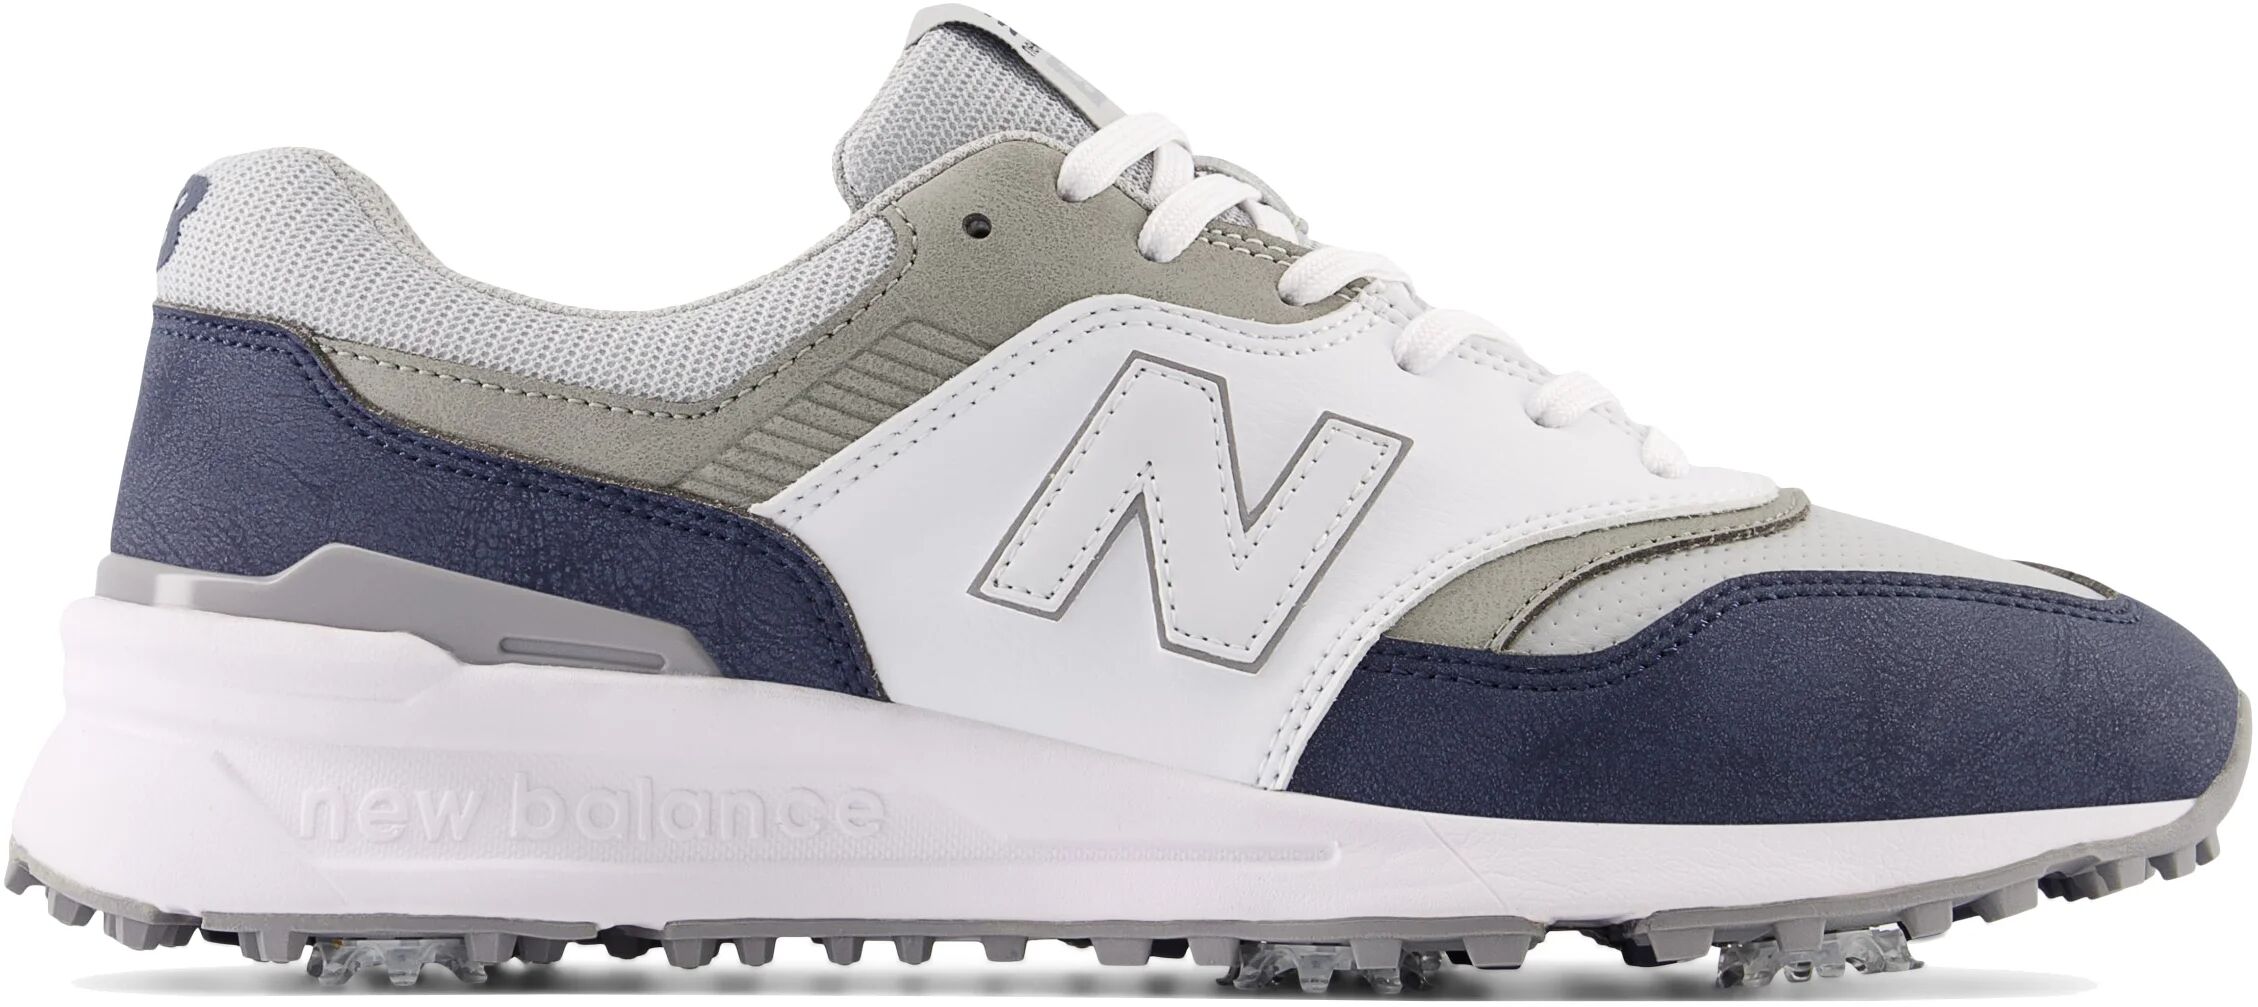 New Balance 997 Golf Shoes 2024 - Navy/White - 16 - 4E